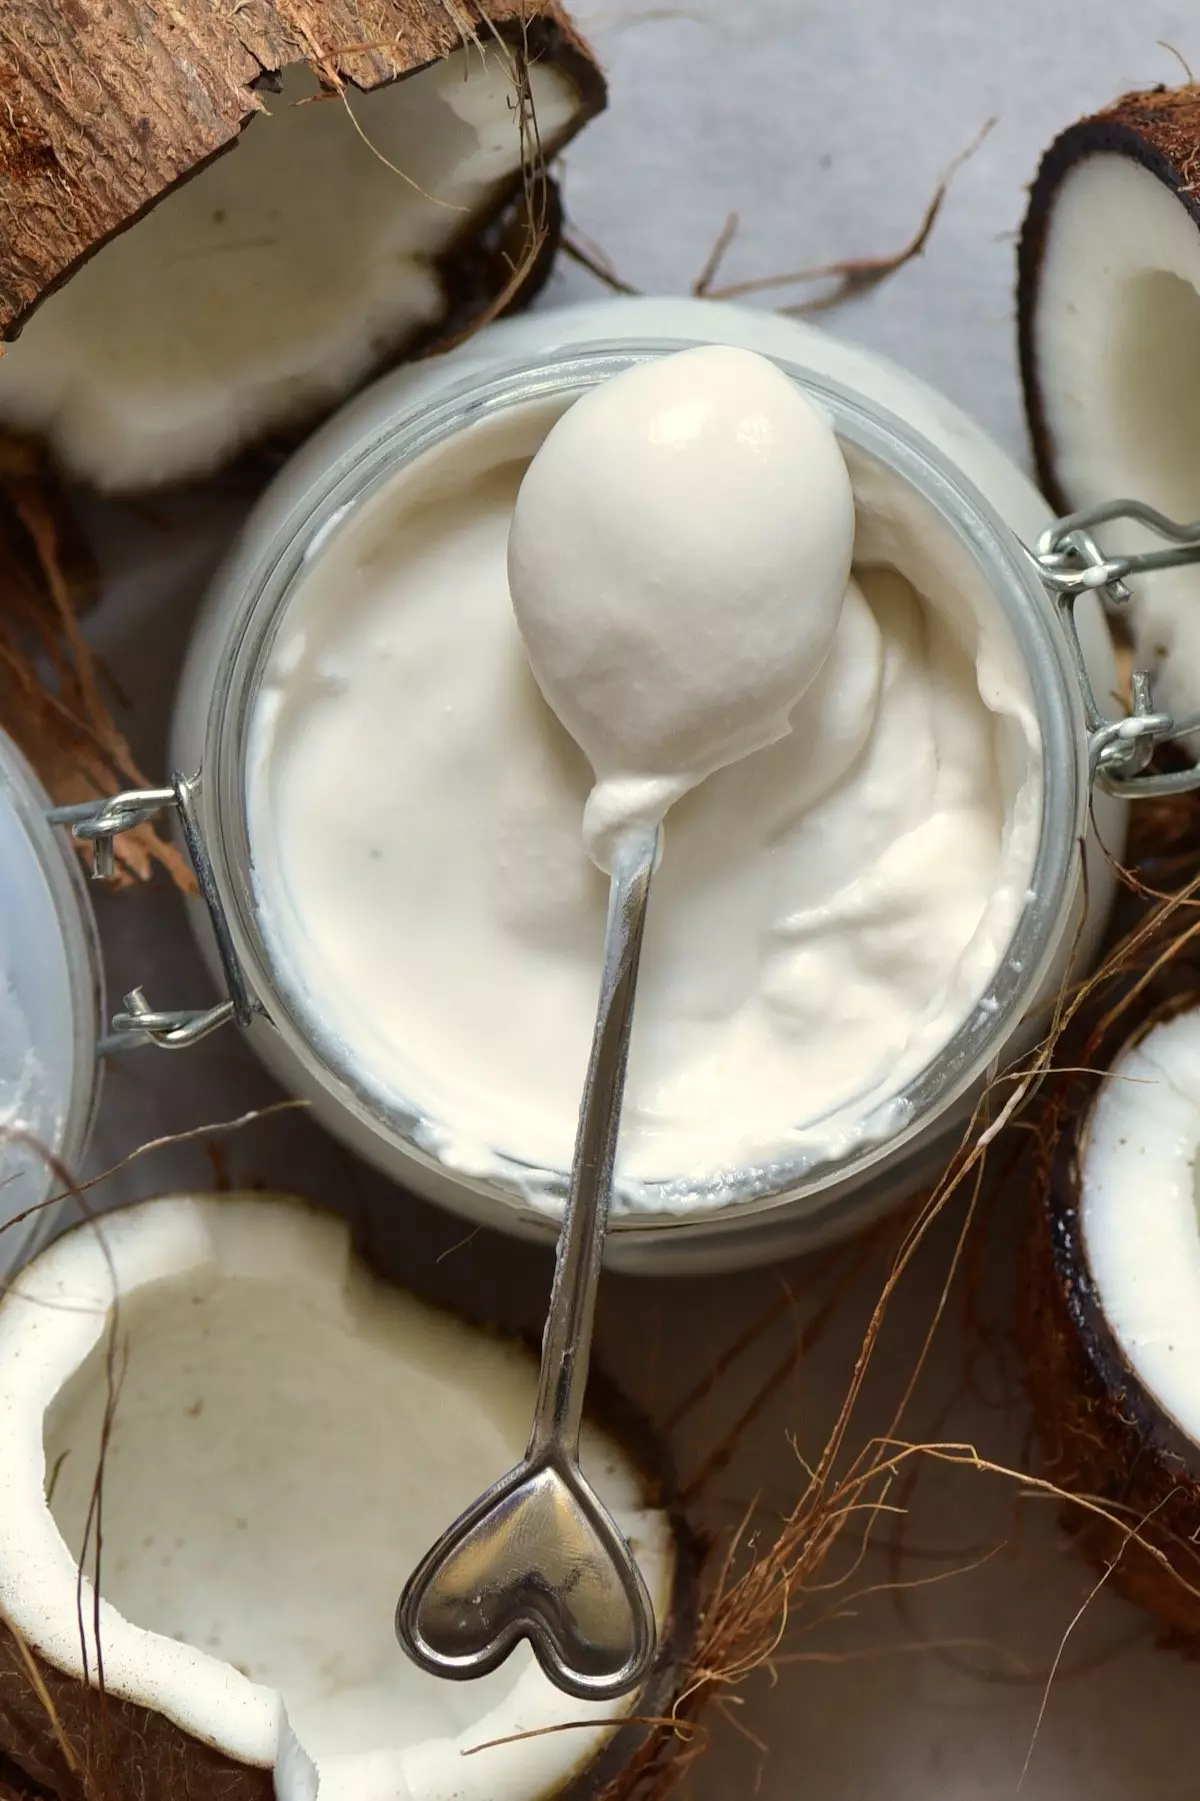 Homemade coconut yogurt in a jar